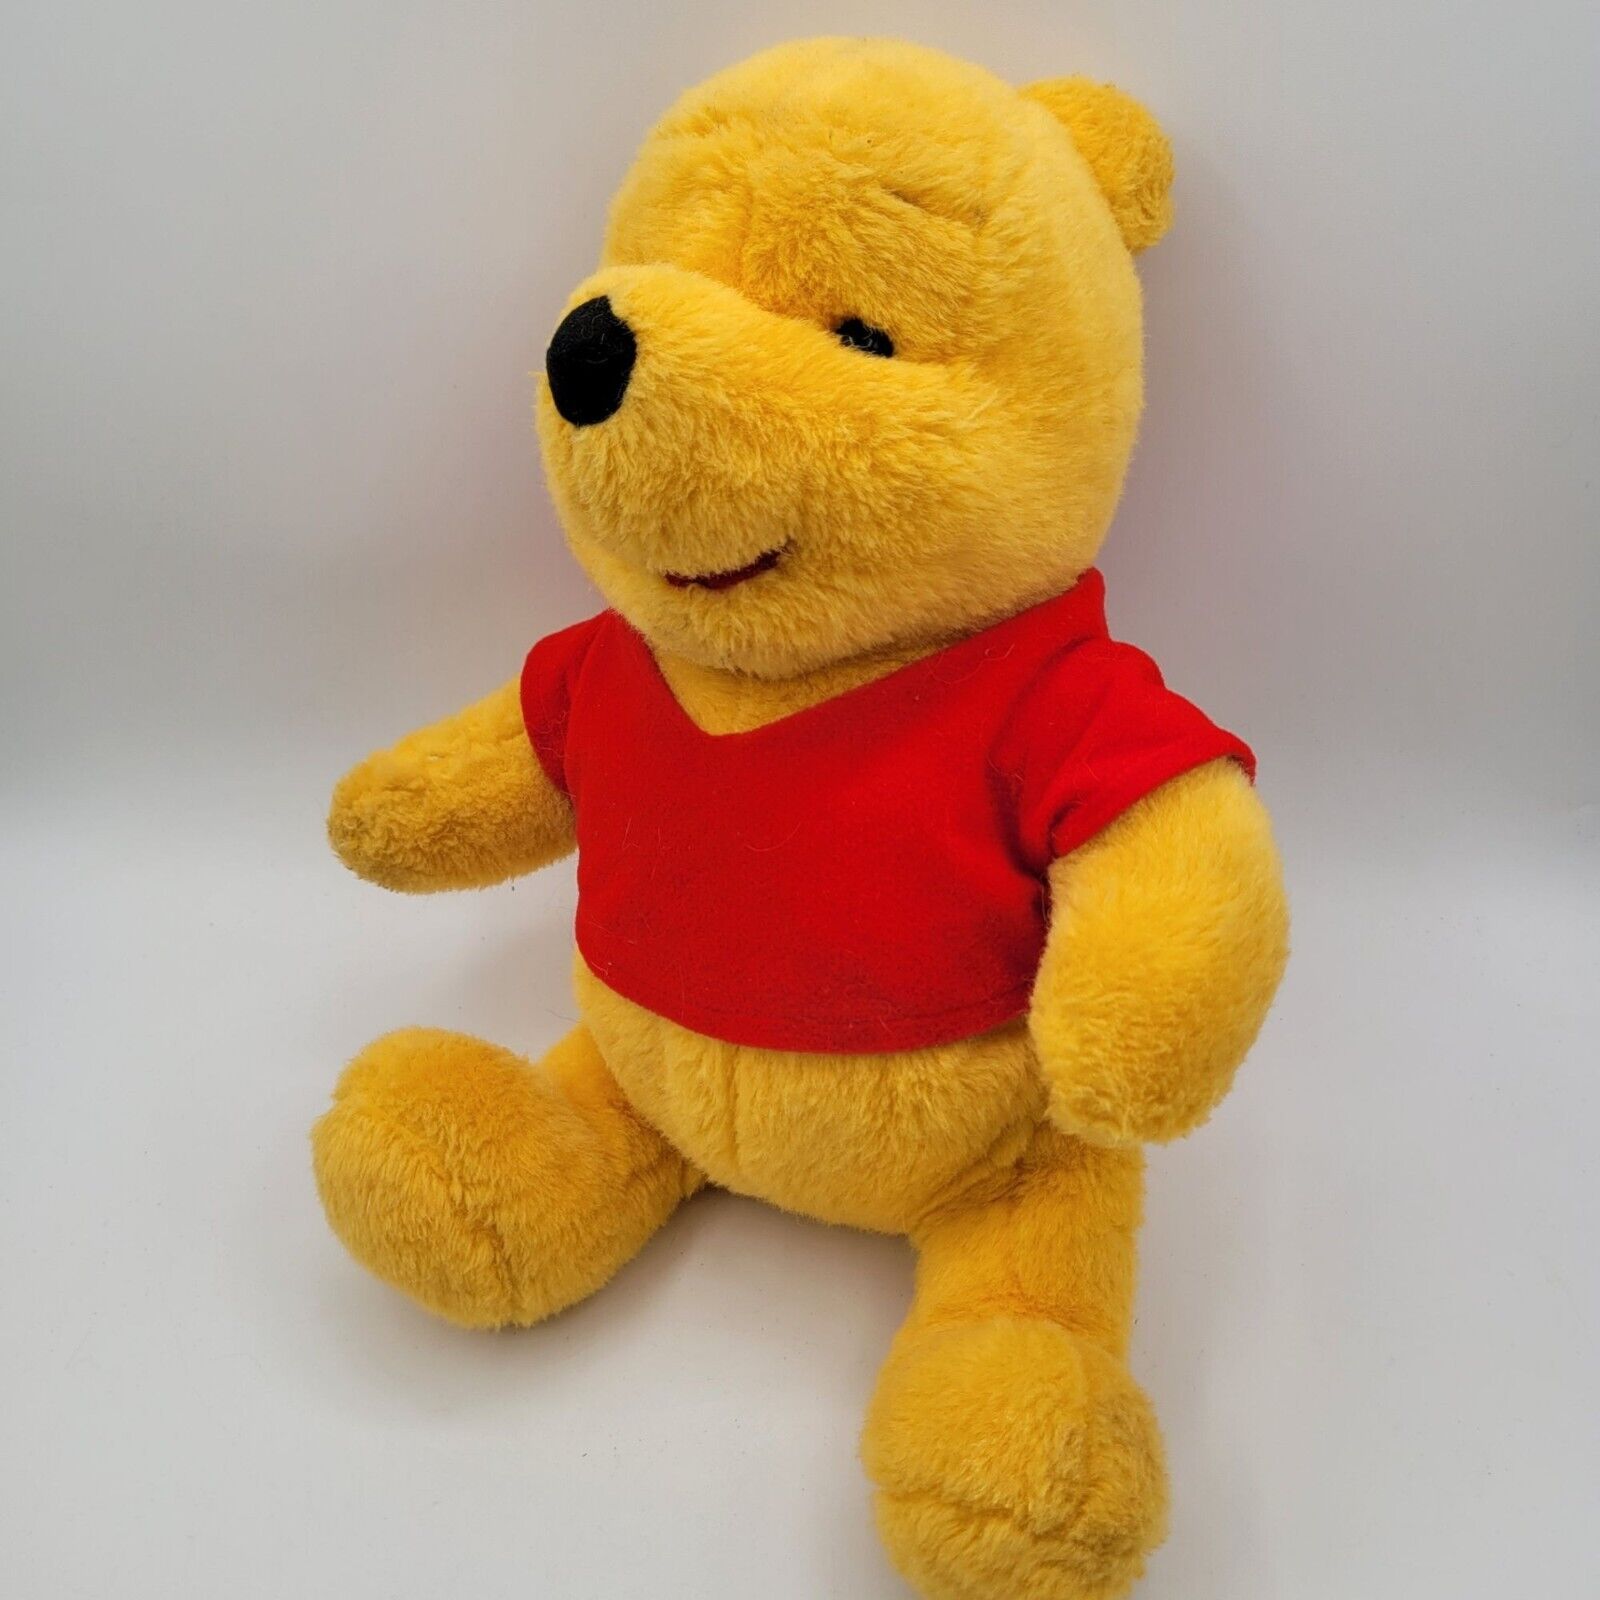 Vintage 1994 Winnie the Pooh Plush Medium Stuffed Animal Soft Toy Mattel